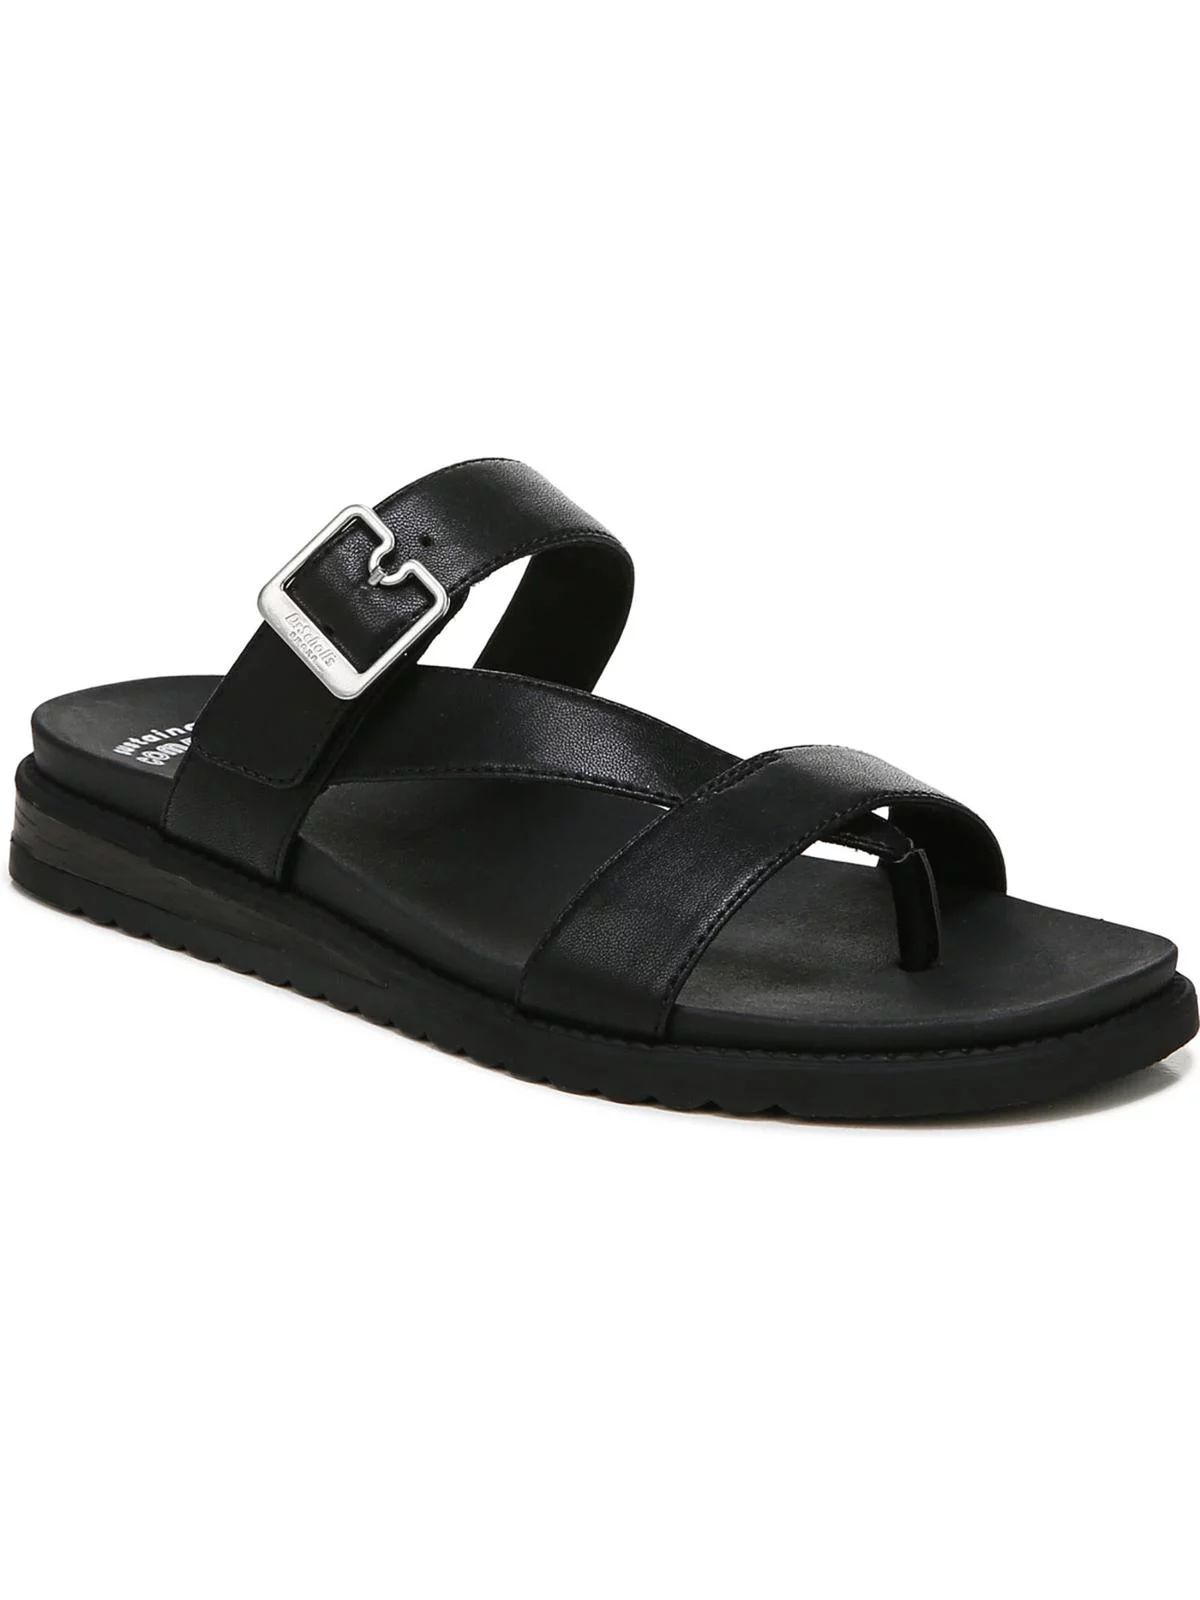 Dr. Scholl's Shoes Womens Island Dream Faux Leather Thong Slide Sandals | Walmart (US)